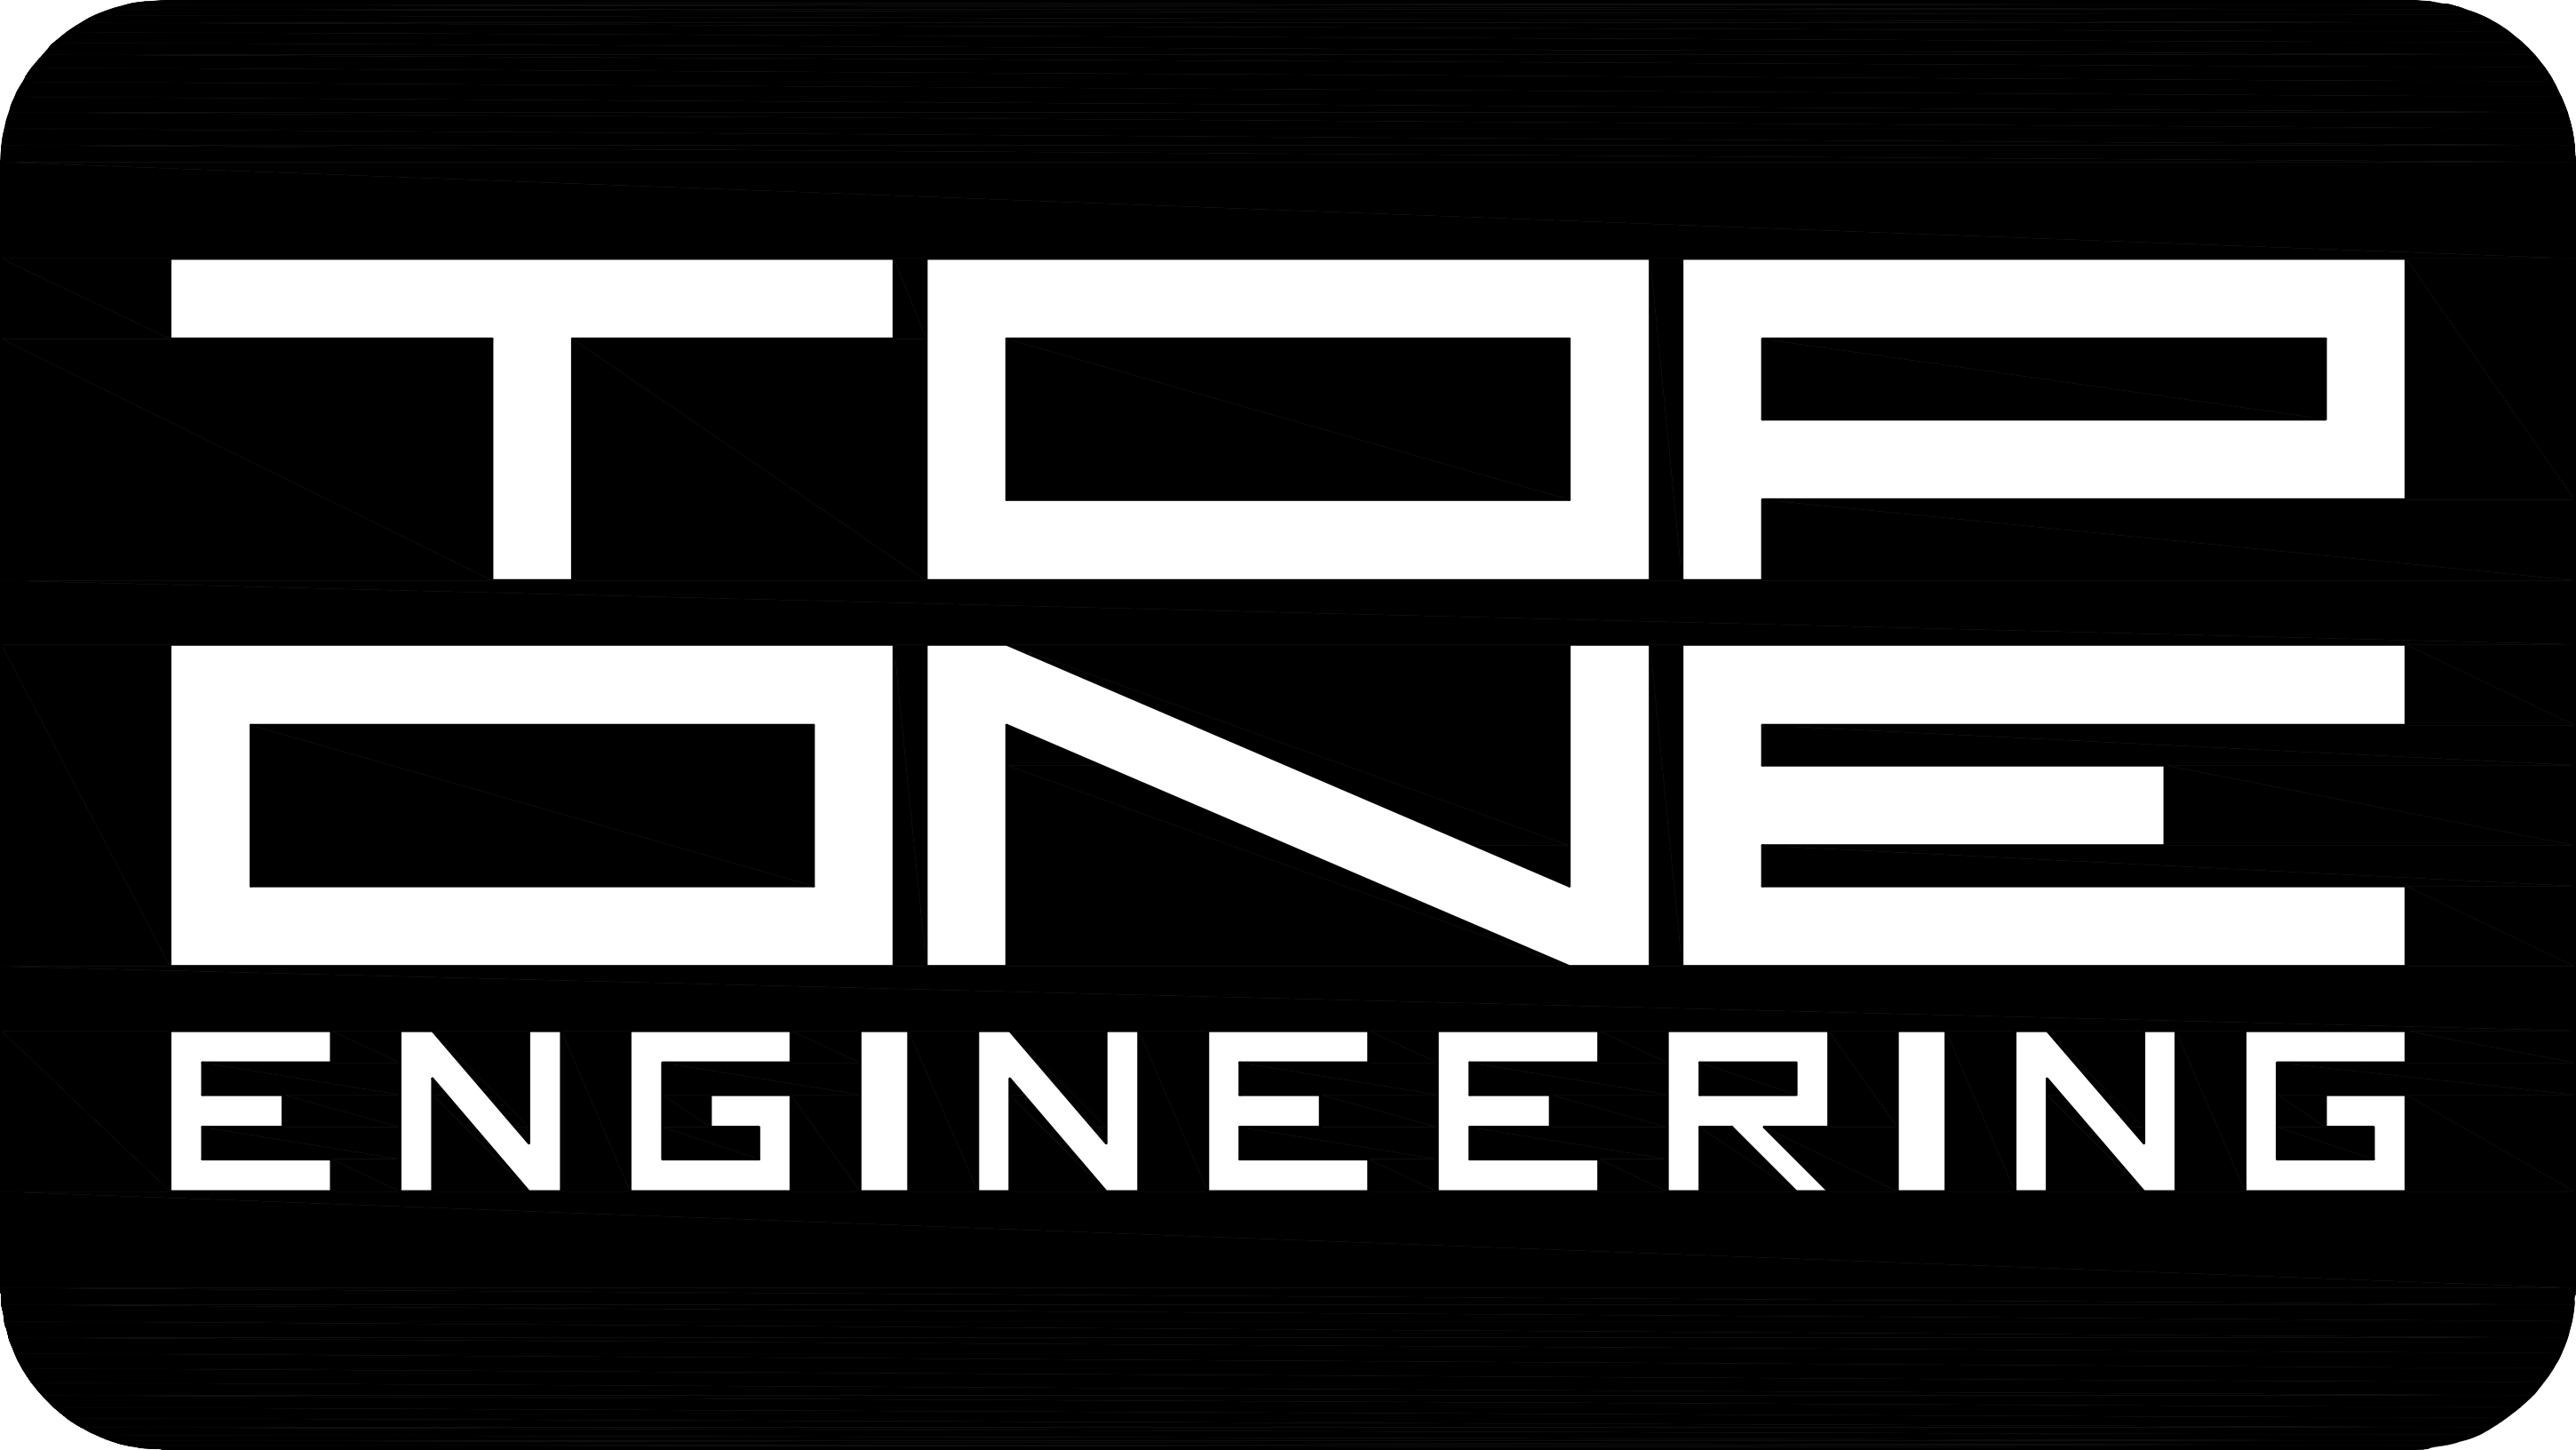 Top One Design Engineering Company Limited 創世設計工程有限公司